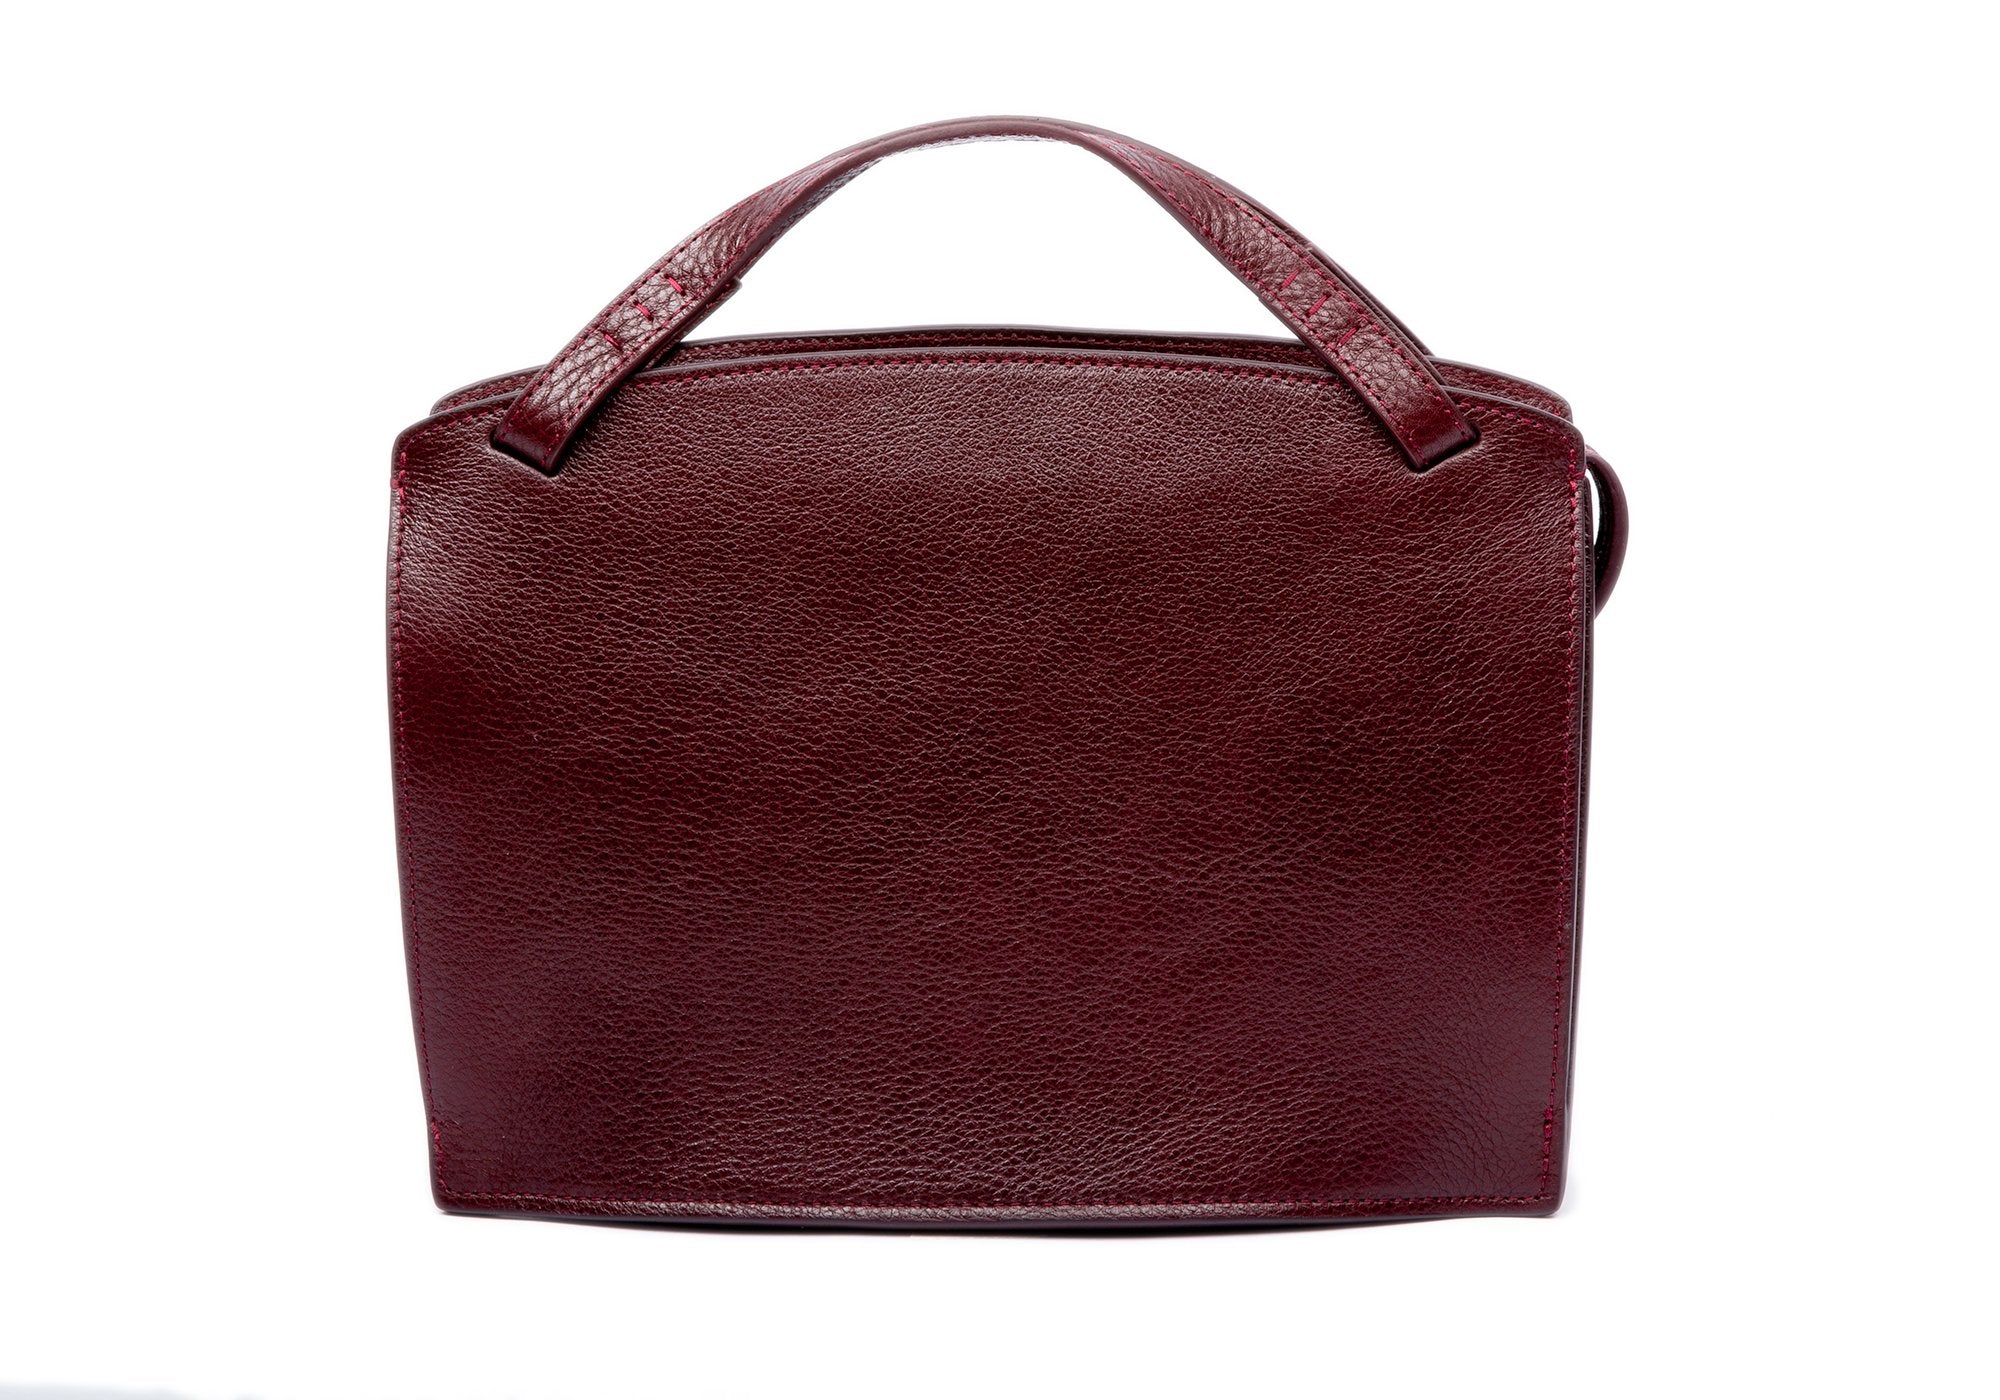 OLIVE bucket bag in burgundy calfskin leather